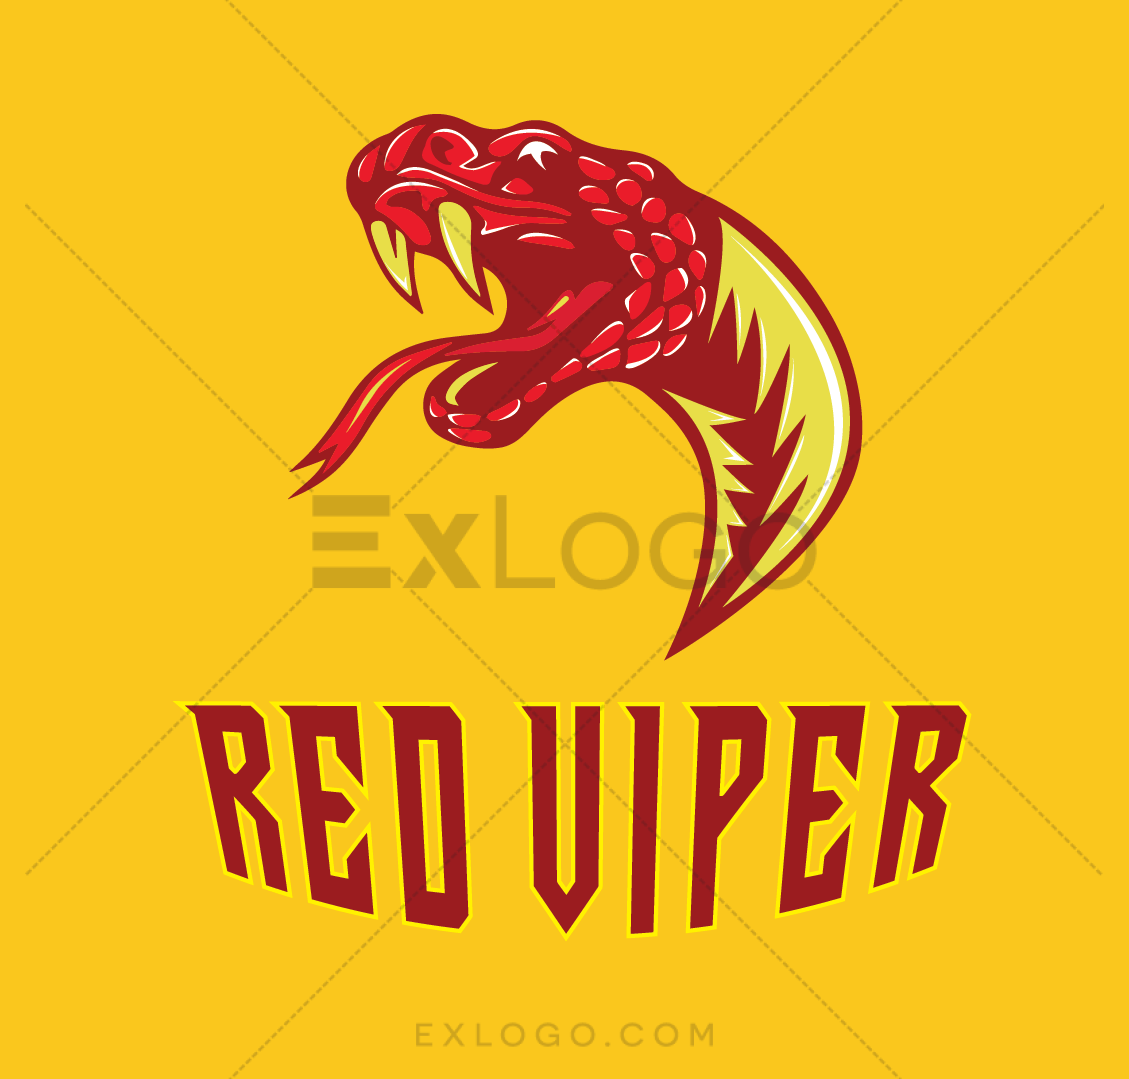 Red Viper Logo - Red Viper